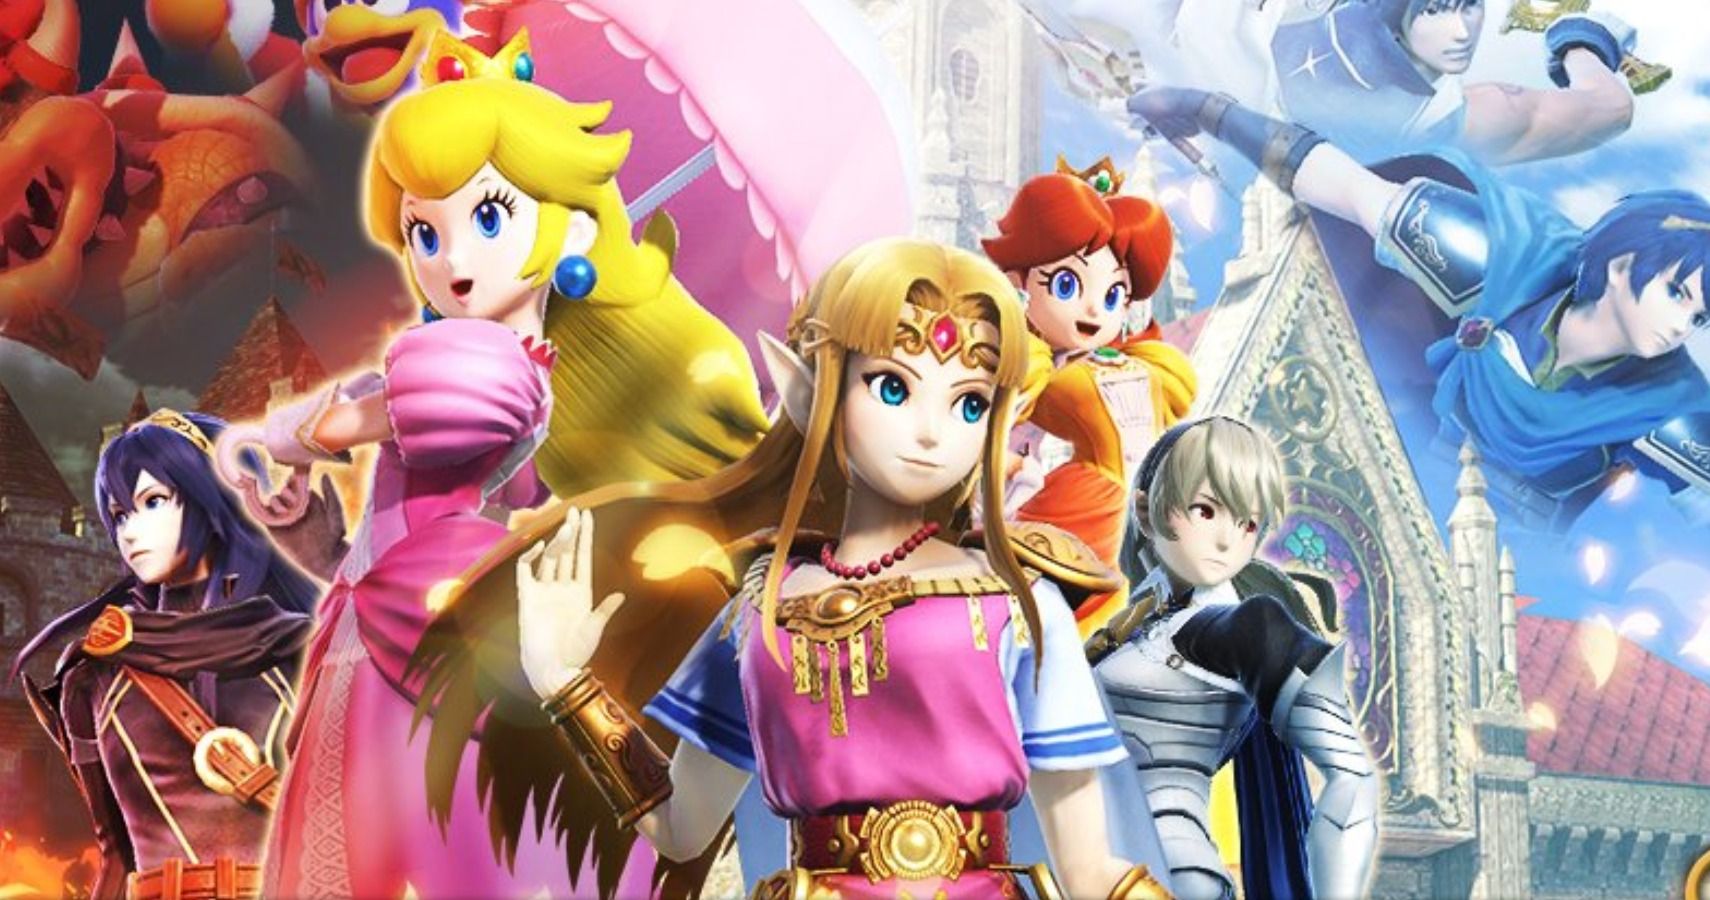 Nintendo Announces "Royal" Smash Ultimate Online Tournament Beginning